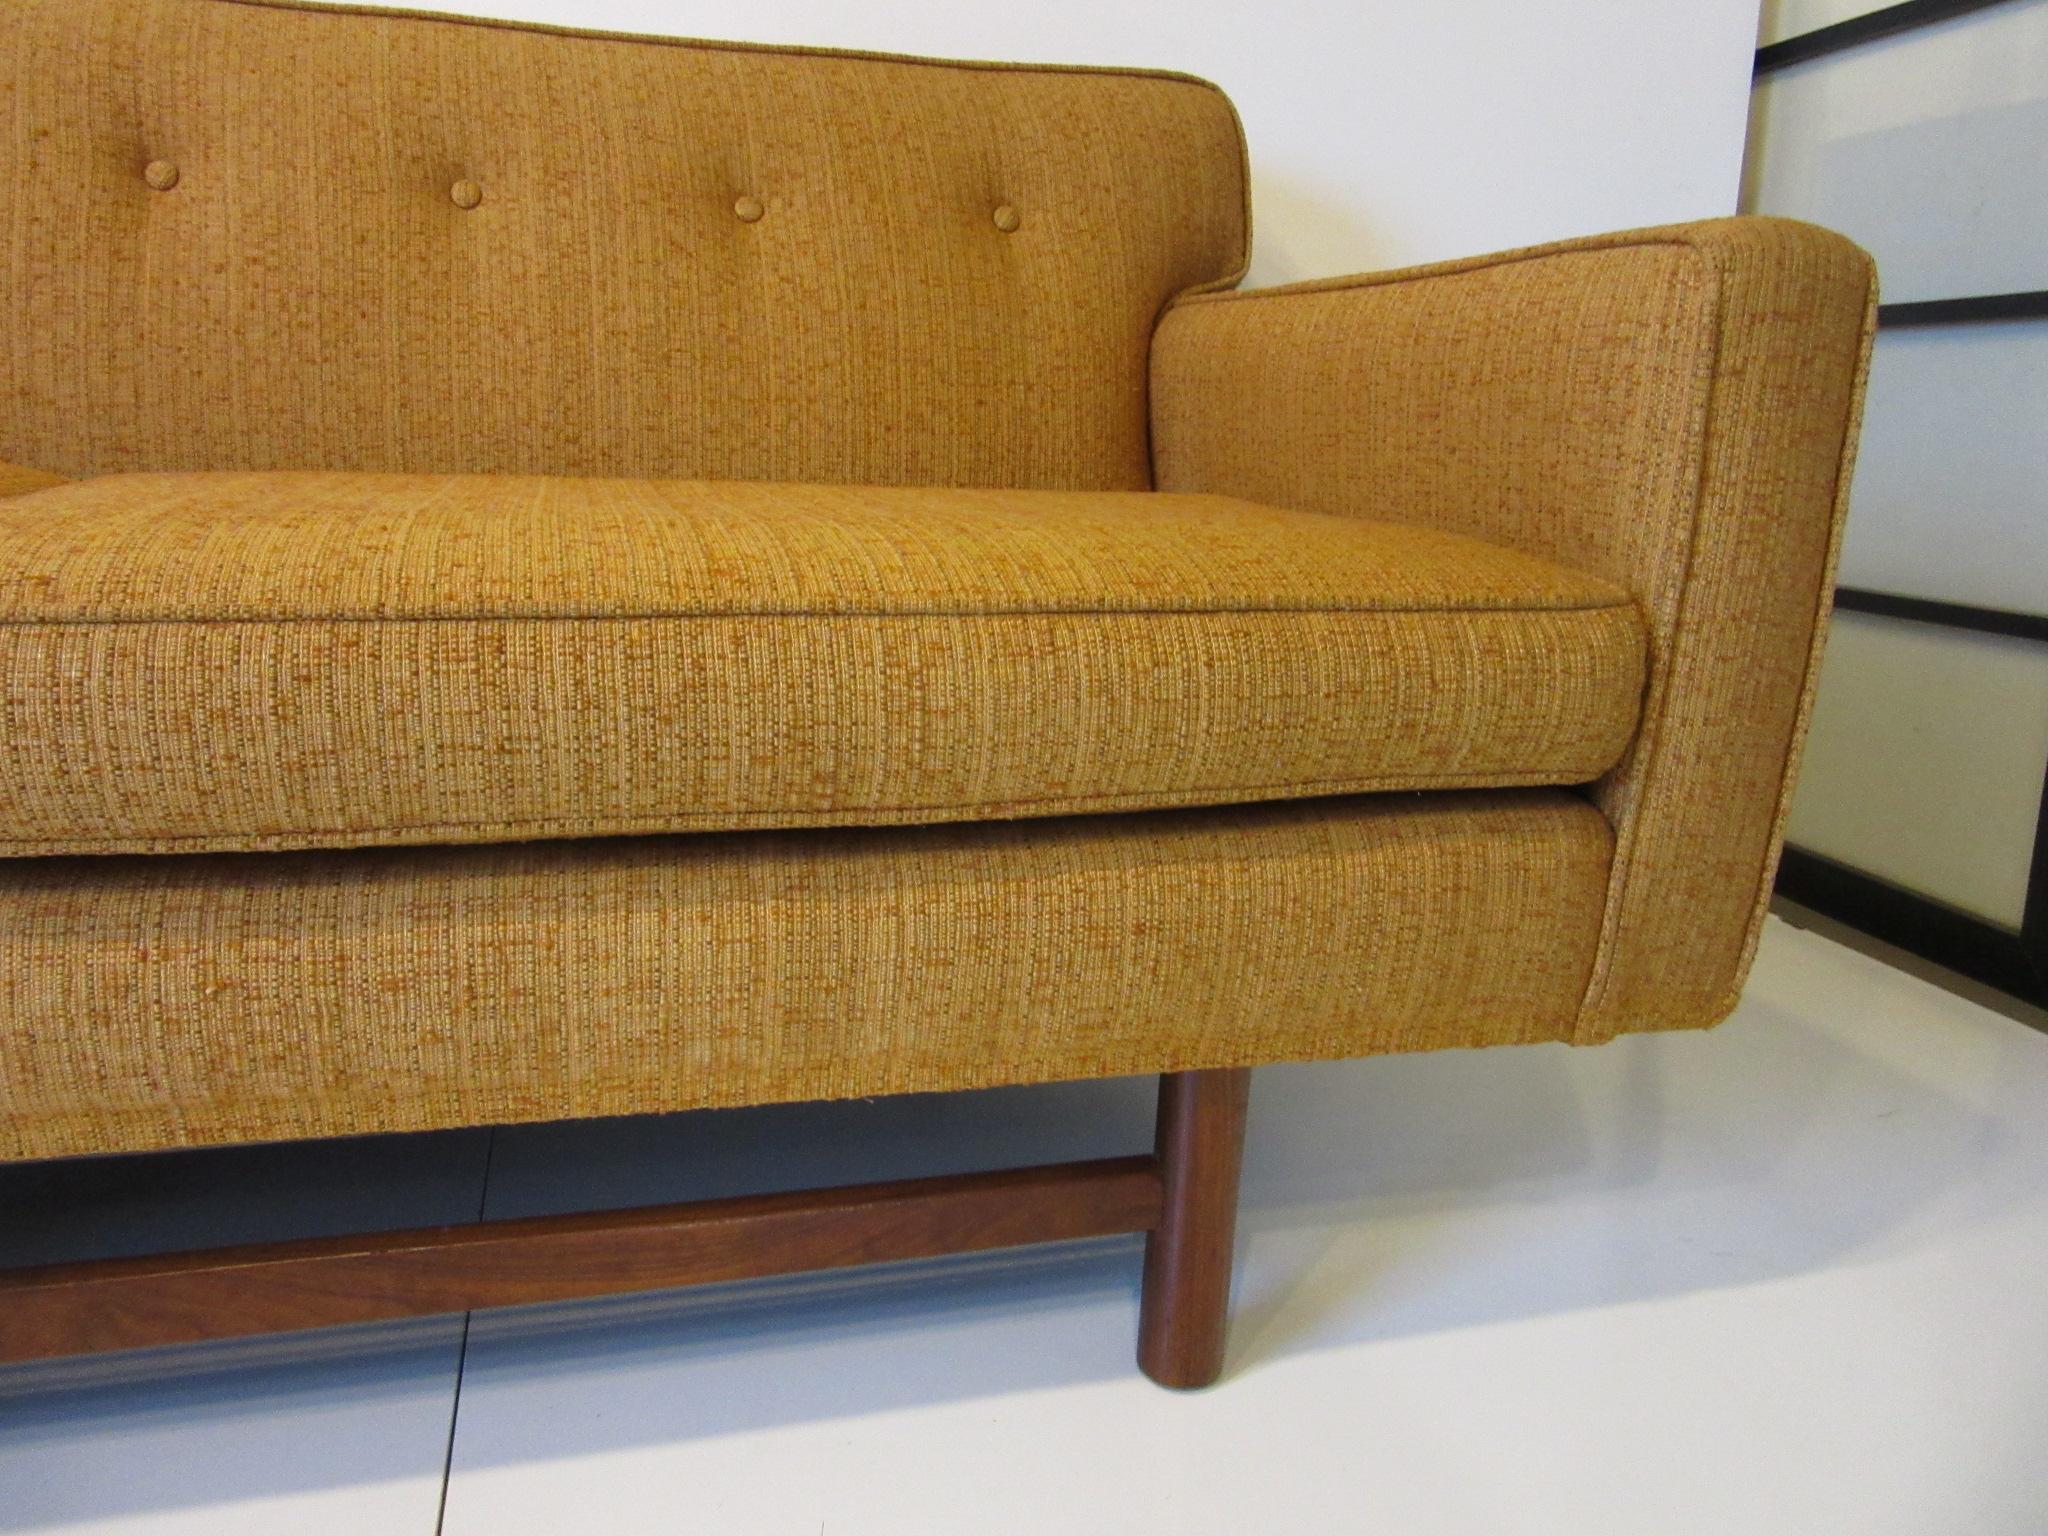 20th Century Mid Century Sofa in the style of Harvey Probber